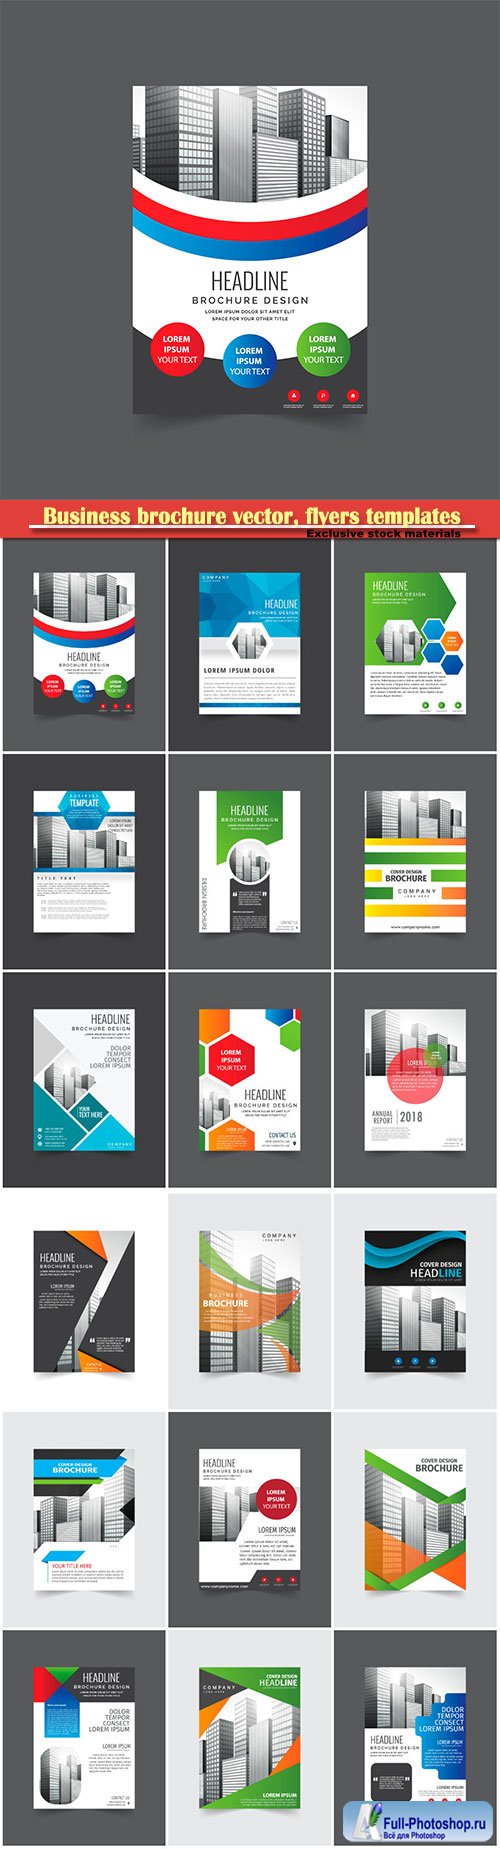 Business brochure vector, flyers templates, report cover design # 101